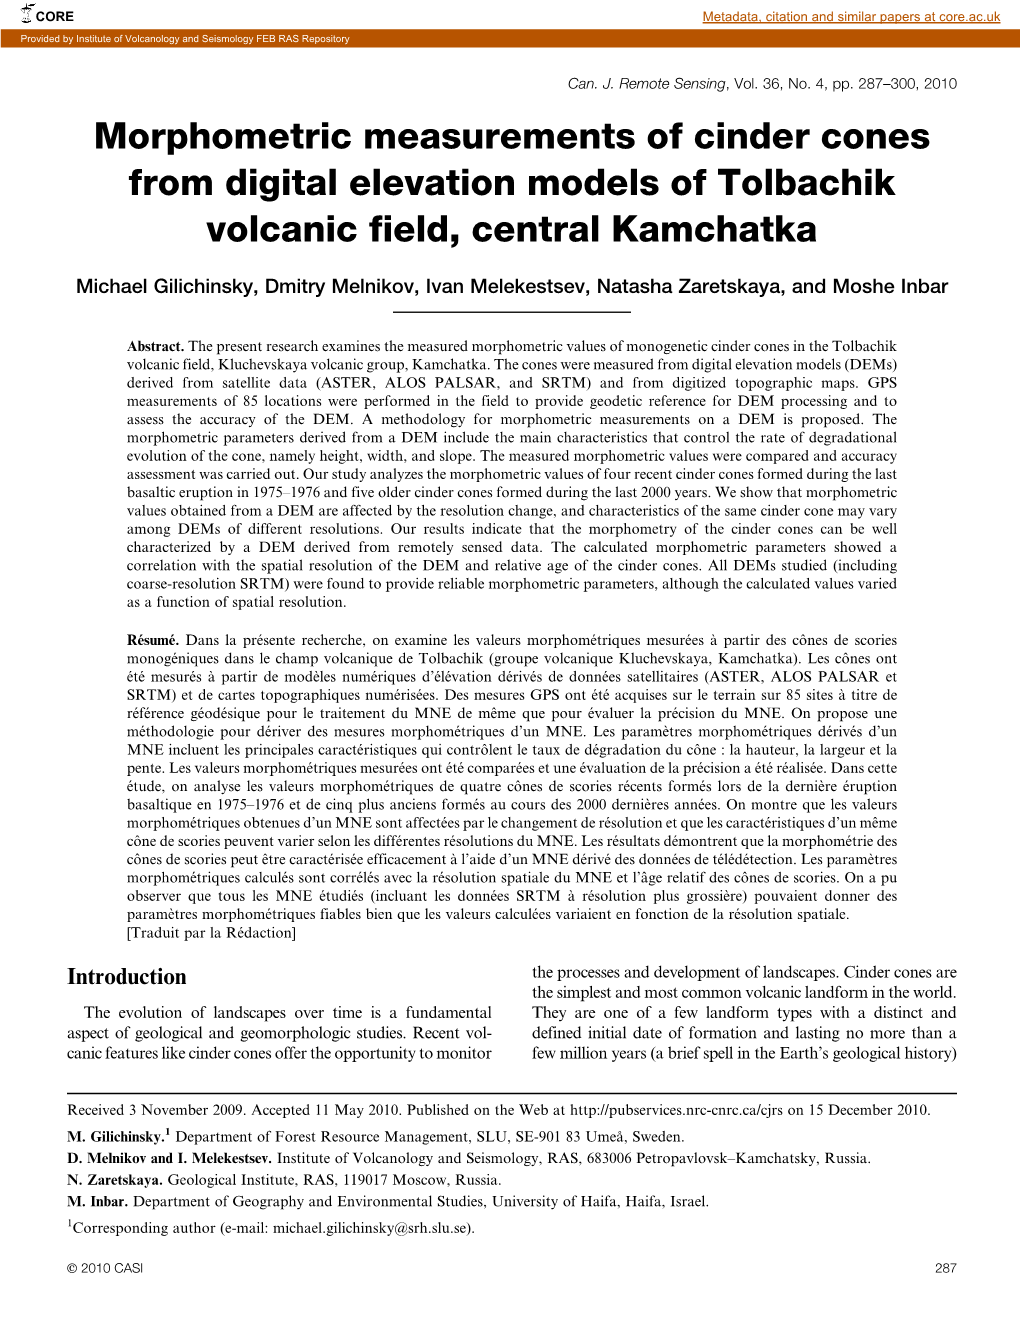 Morphometric Measurements of Cinder Cones from Digital Elevation Models of Tolbachik Volcanic Field, Central Kamchatka